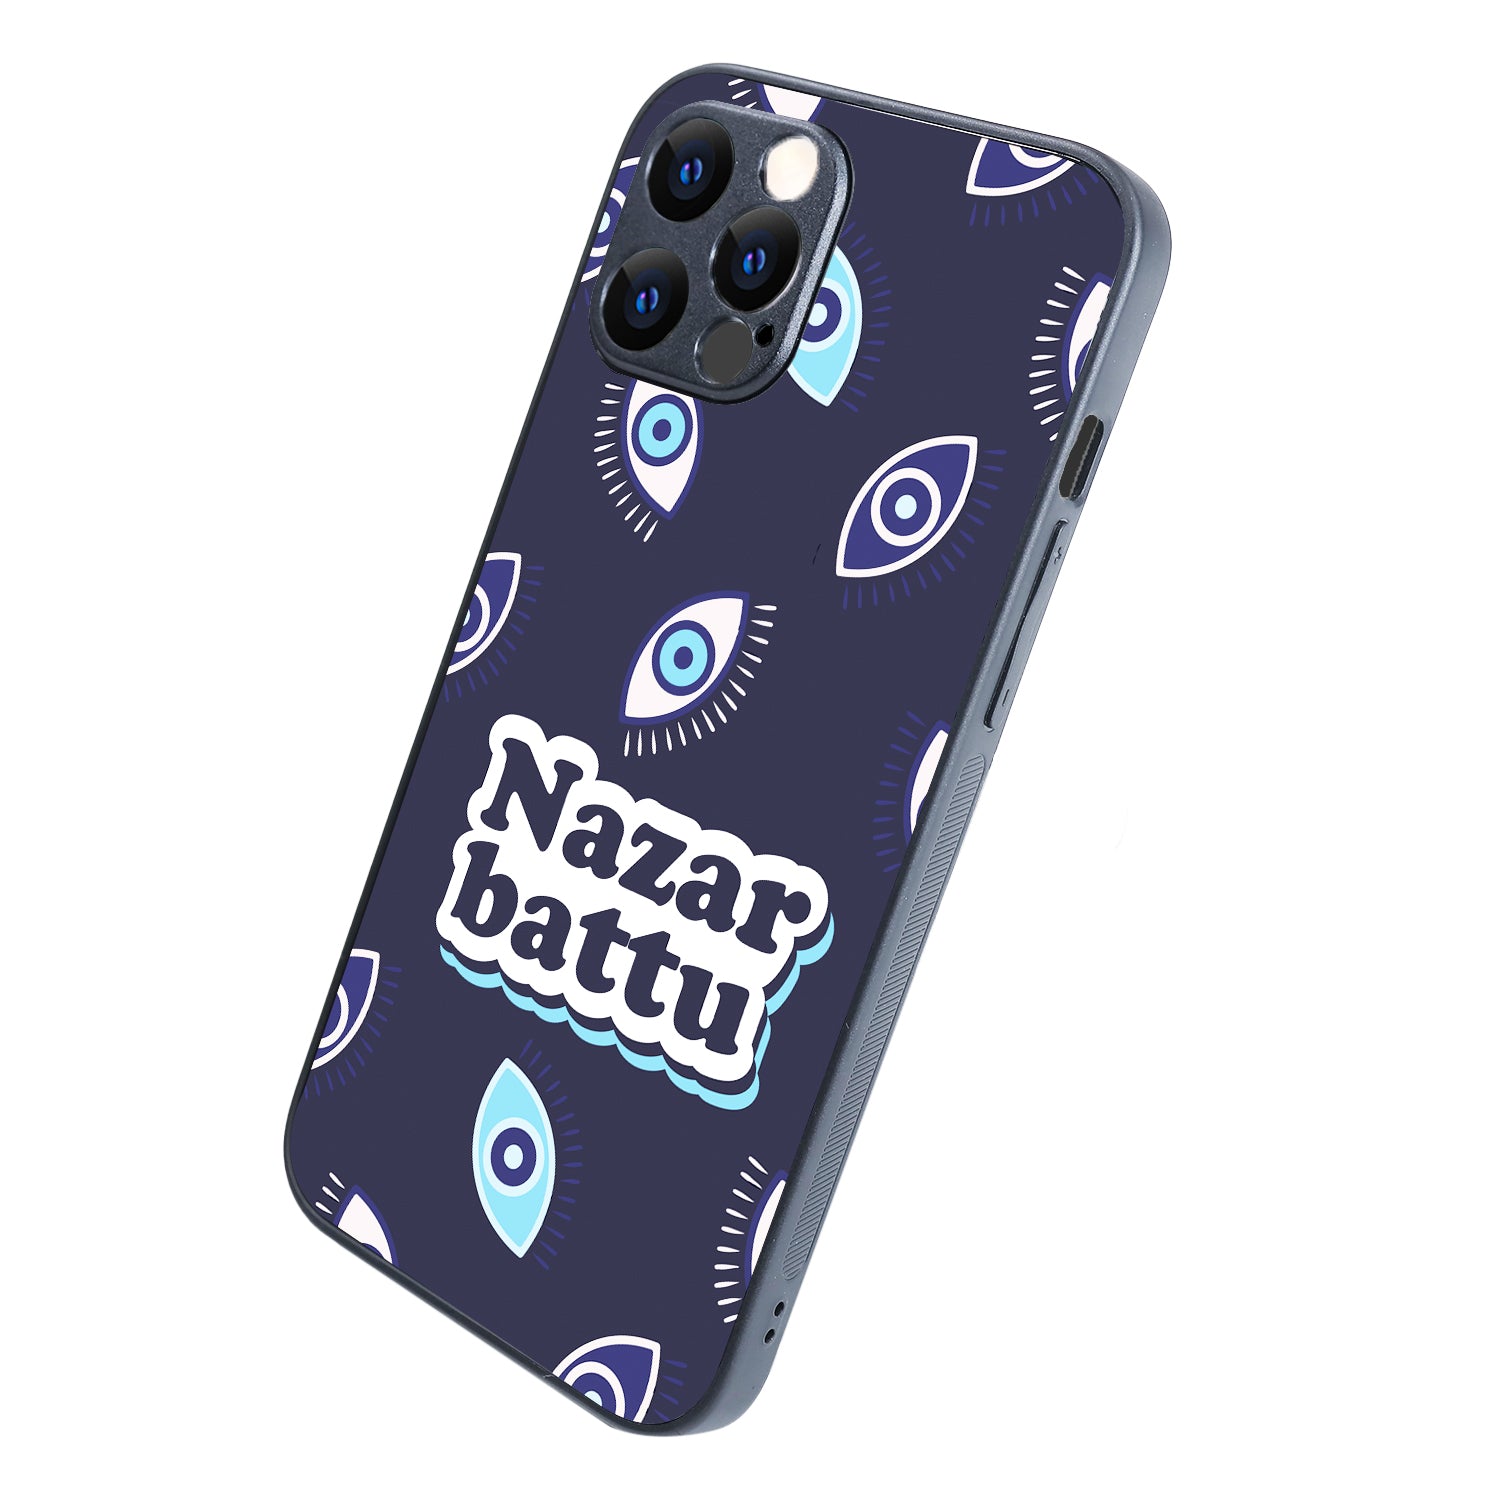 Nazar Battu Motivational Quotes iPhone 12 Pro Max Case